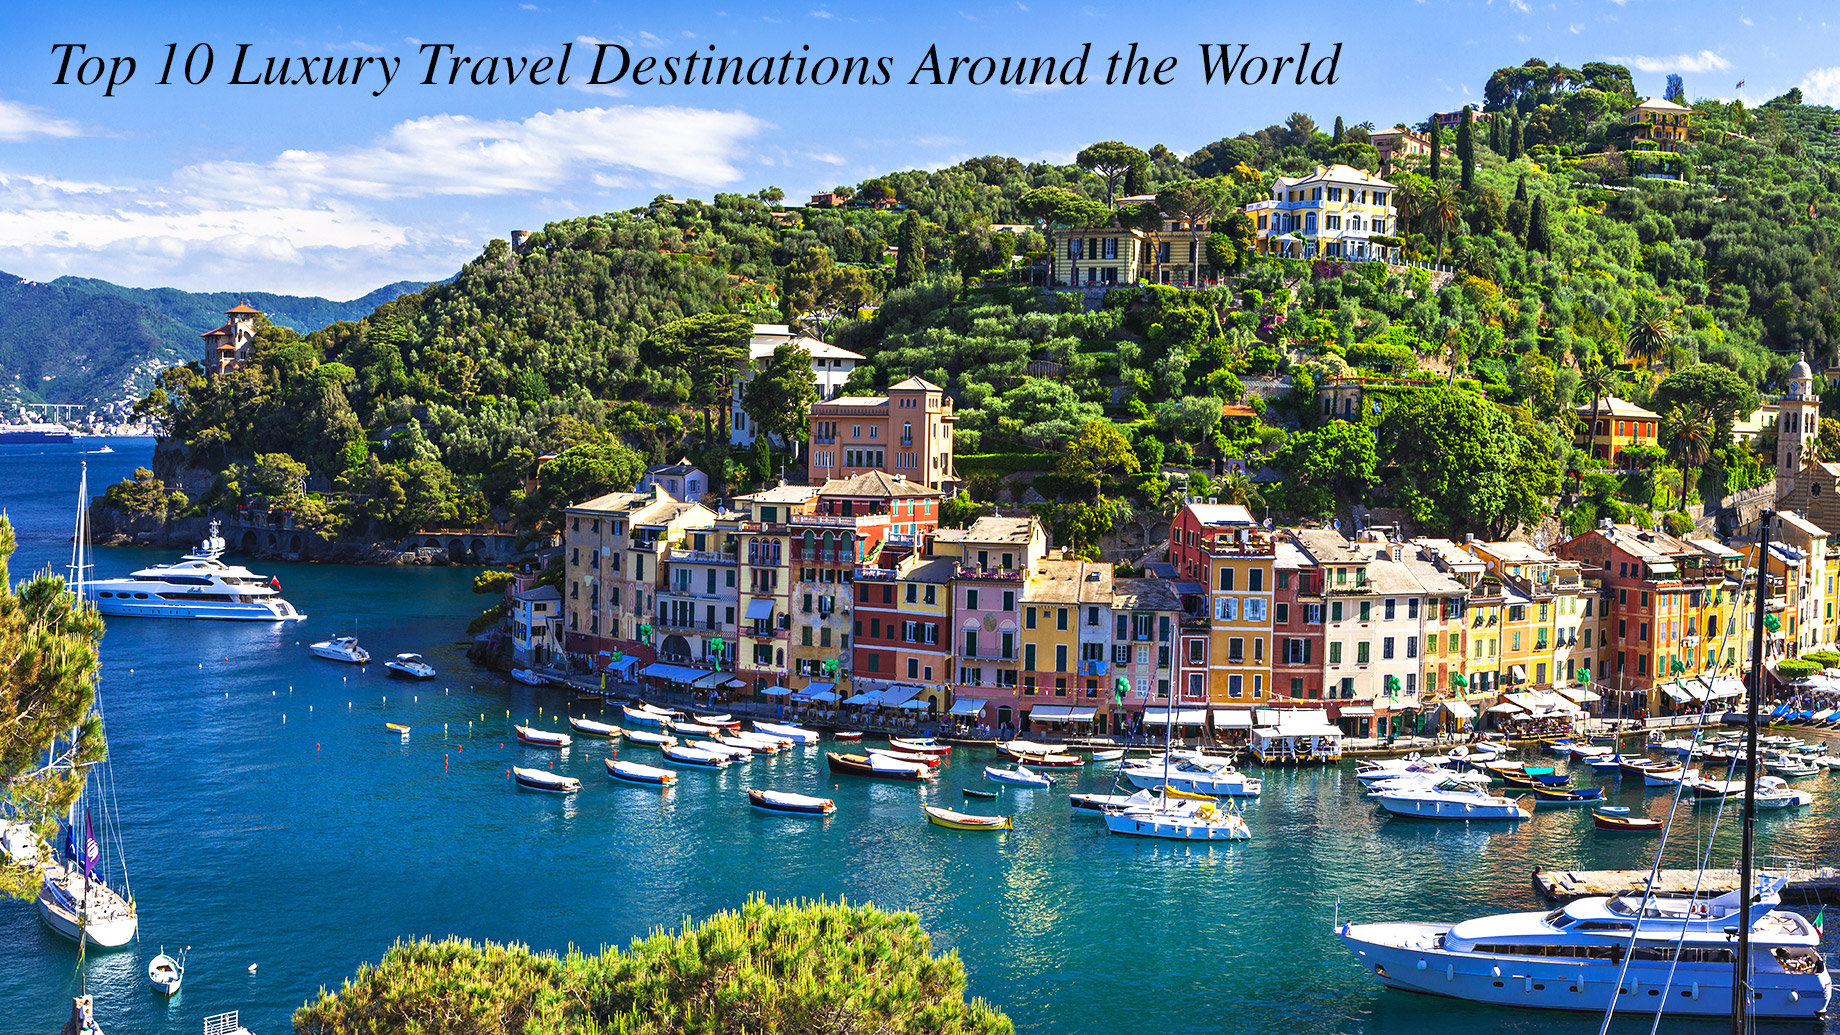 Top 11 Luxury Travel Destinations Around the World – The Pinnacle List